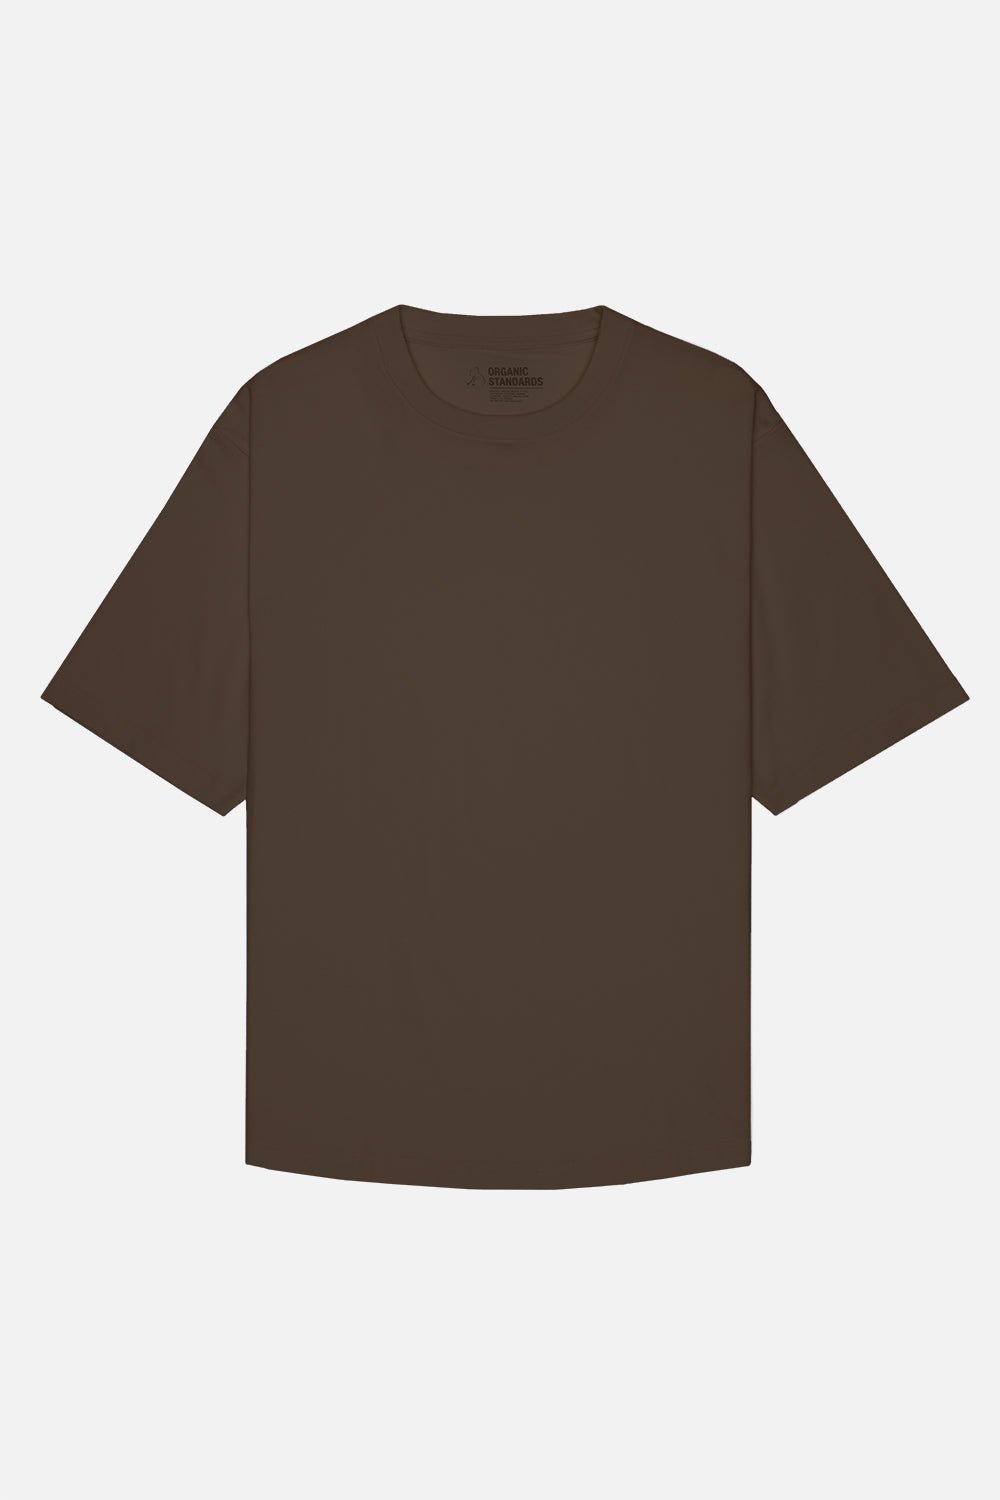 L'Amour Supreme Triple - Long Sleeve T-Shirt for Men